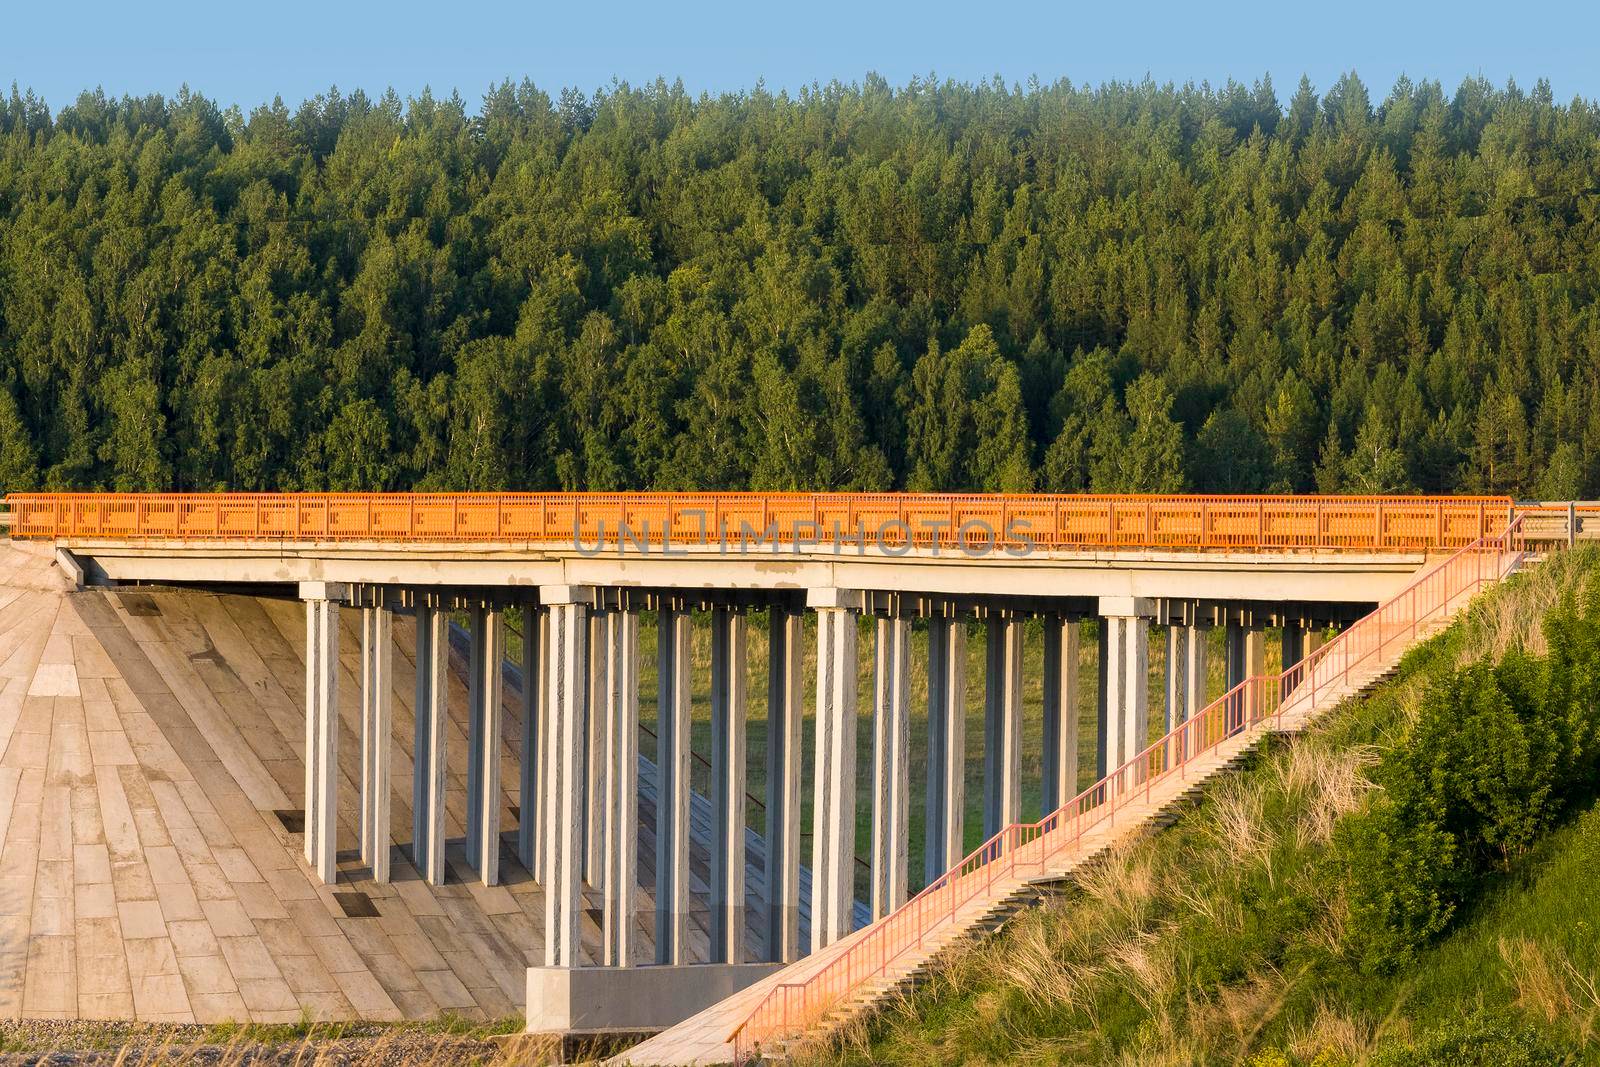 Unique concrete bridge and road against background of forest. by Essffes